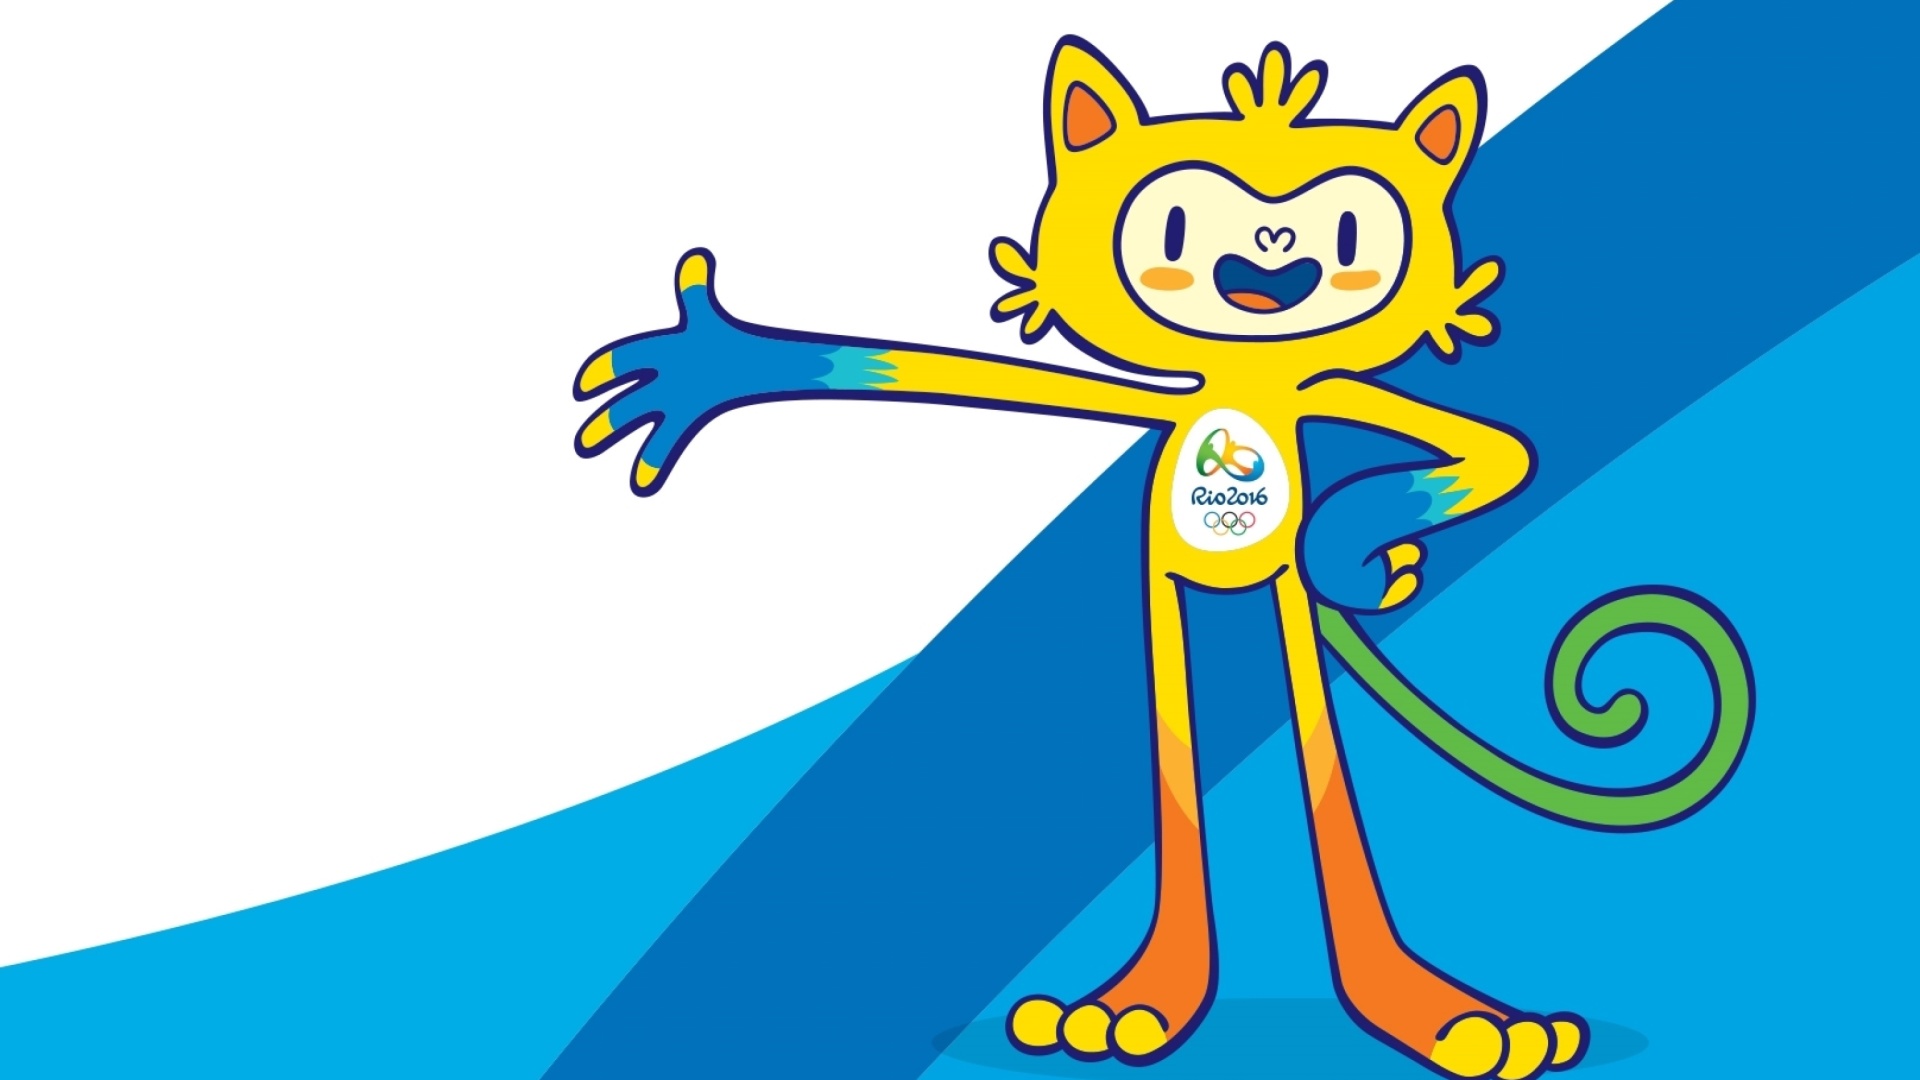 Olympics Mascot Vinicius Rio 2016 wallpaper 1920x1080